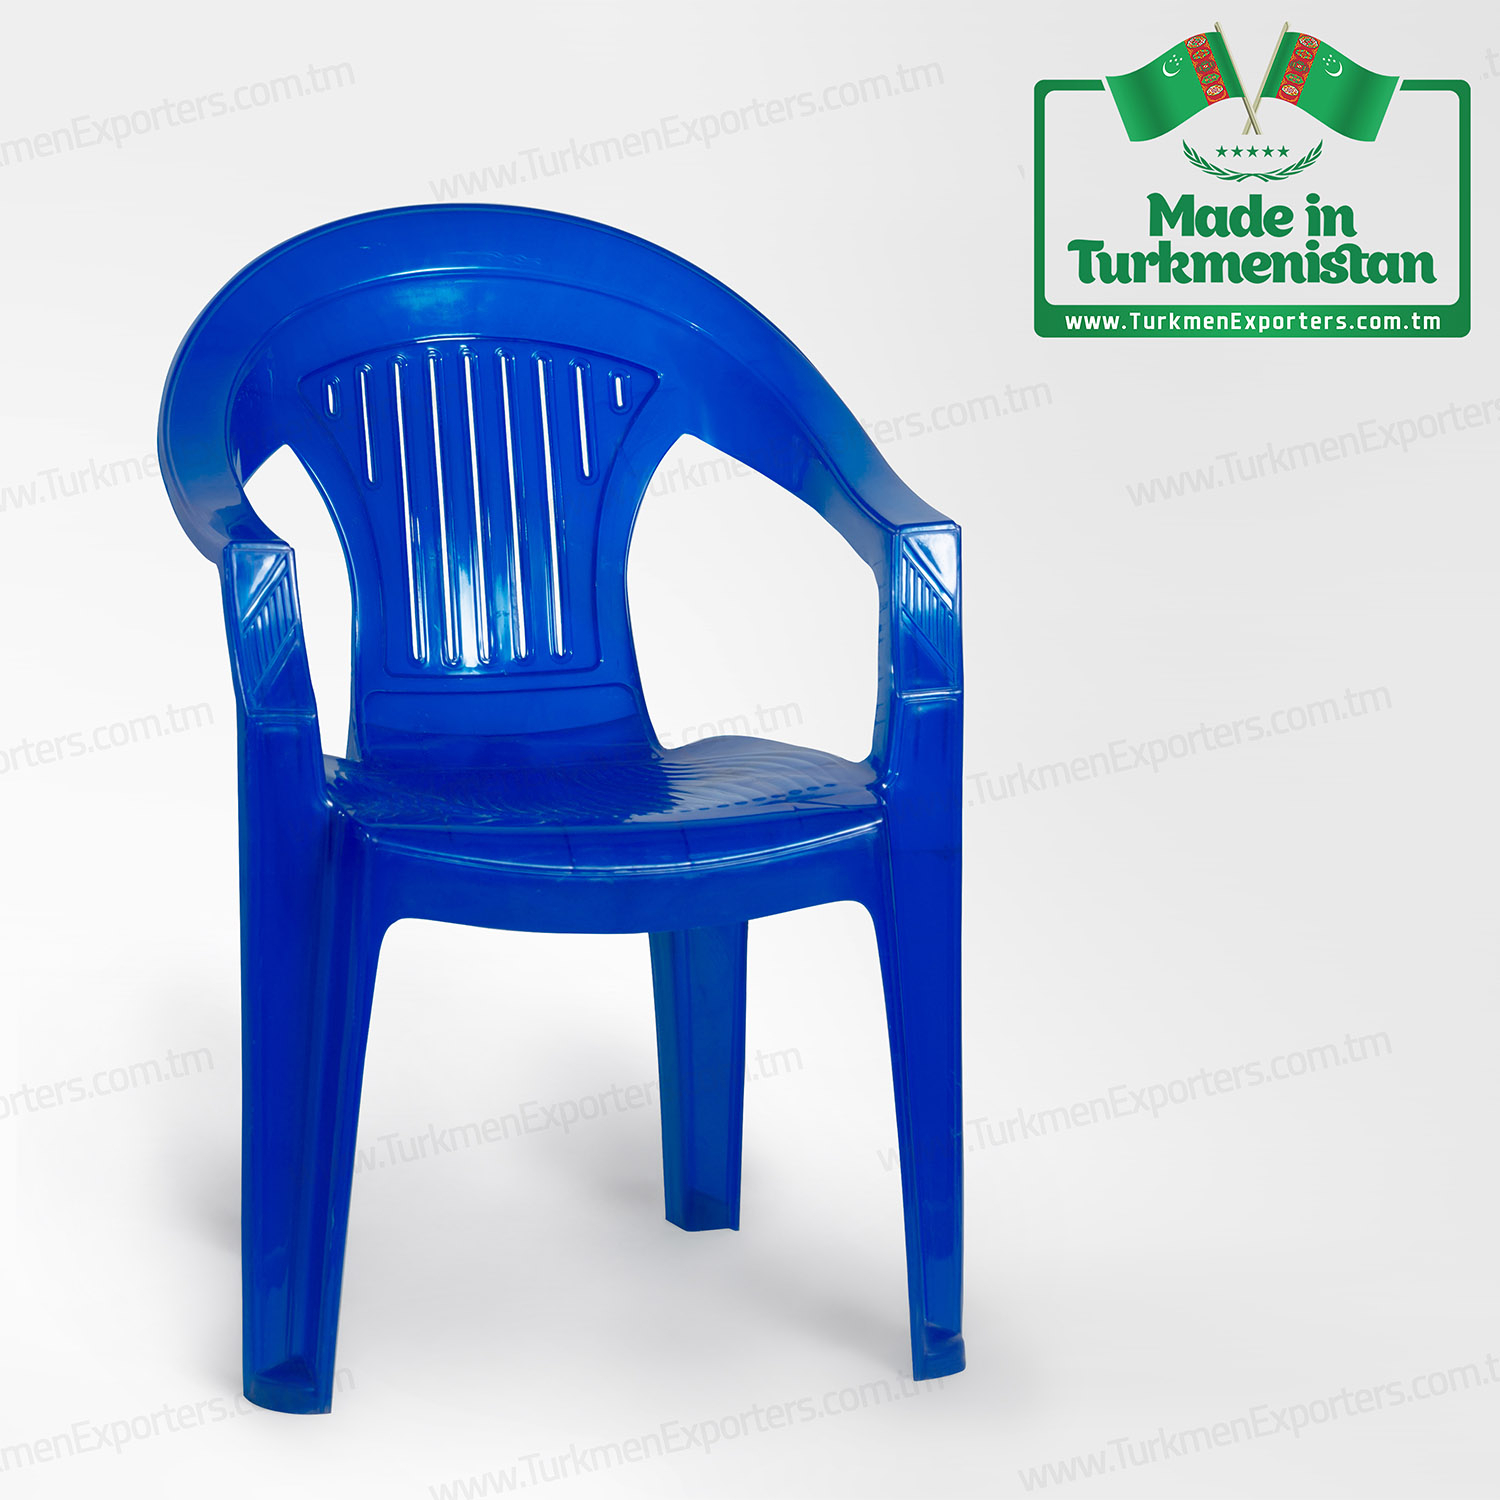 Plastic chair from Turkmenistan wholesale for export | Turkmen Shohle economic society